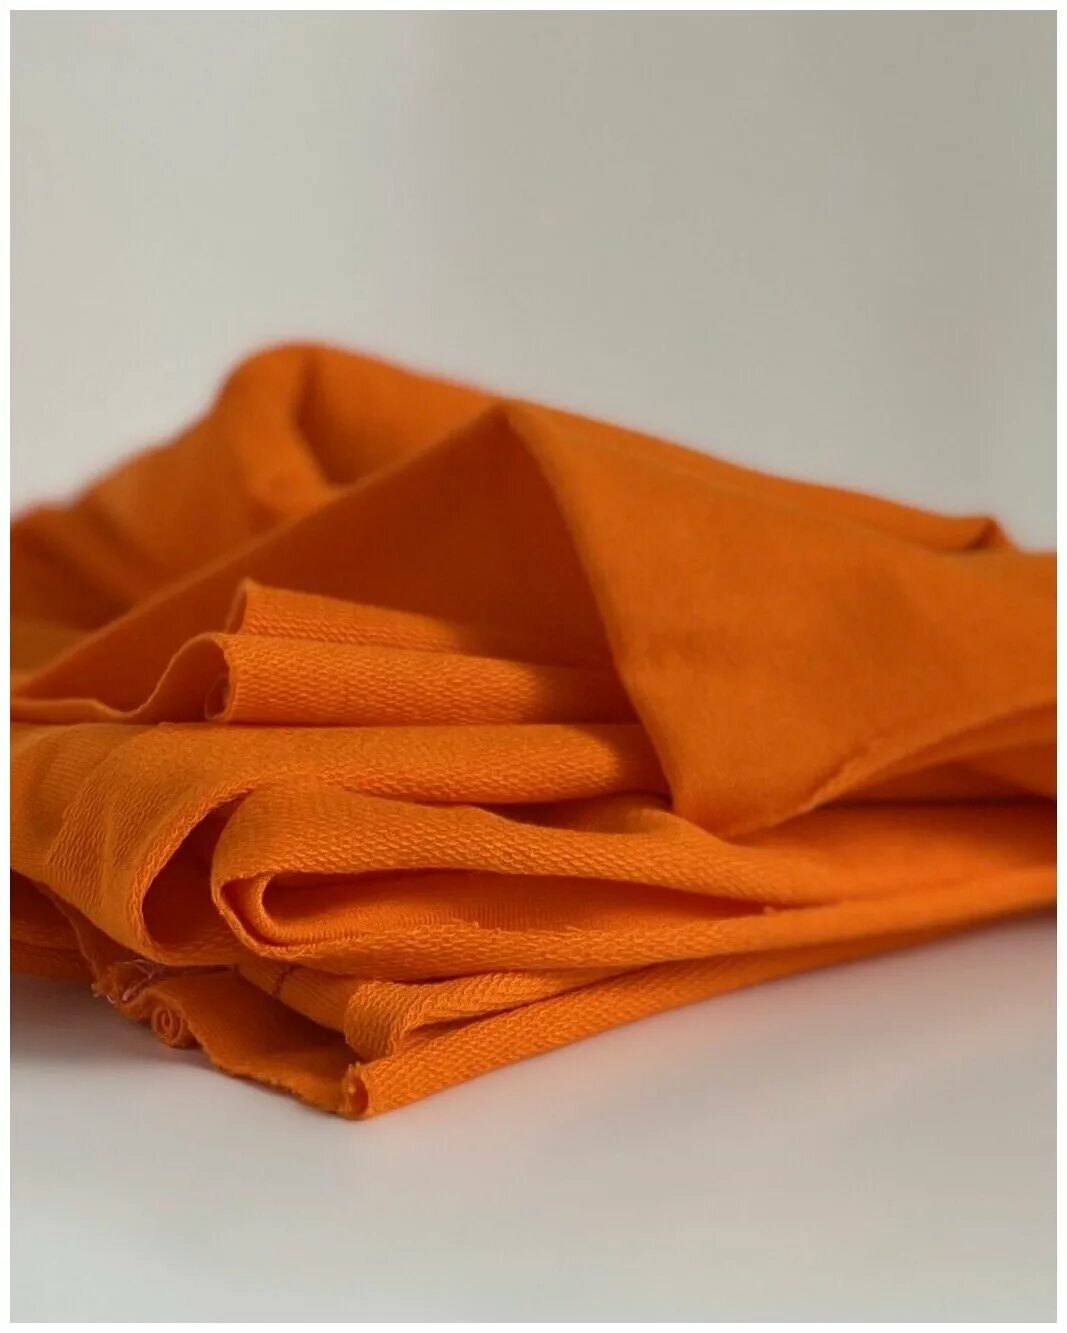 Оранжевая ткань хлопок. Футер оранжевый. Футер апельсинового цвета. Хлопок оранжевый с мушками. Оранжевый хлопок